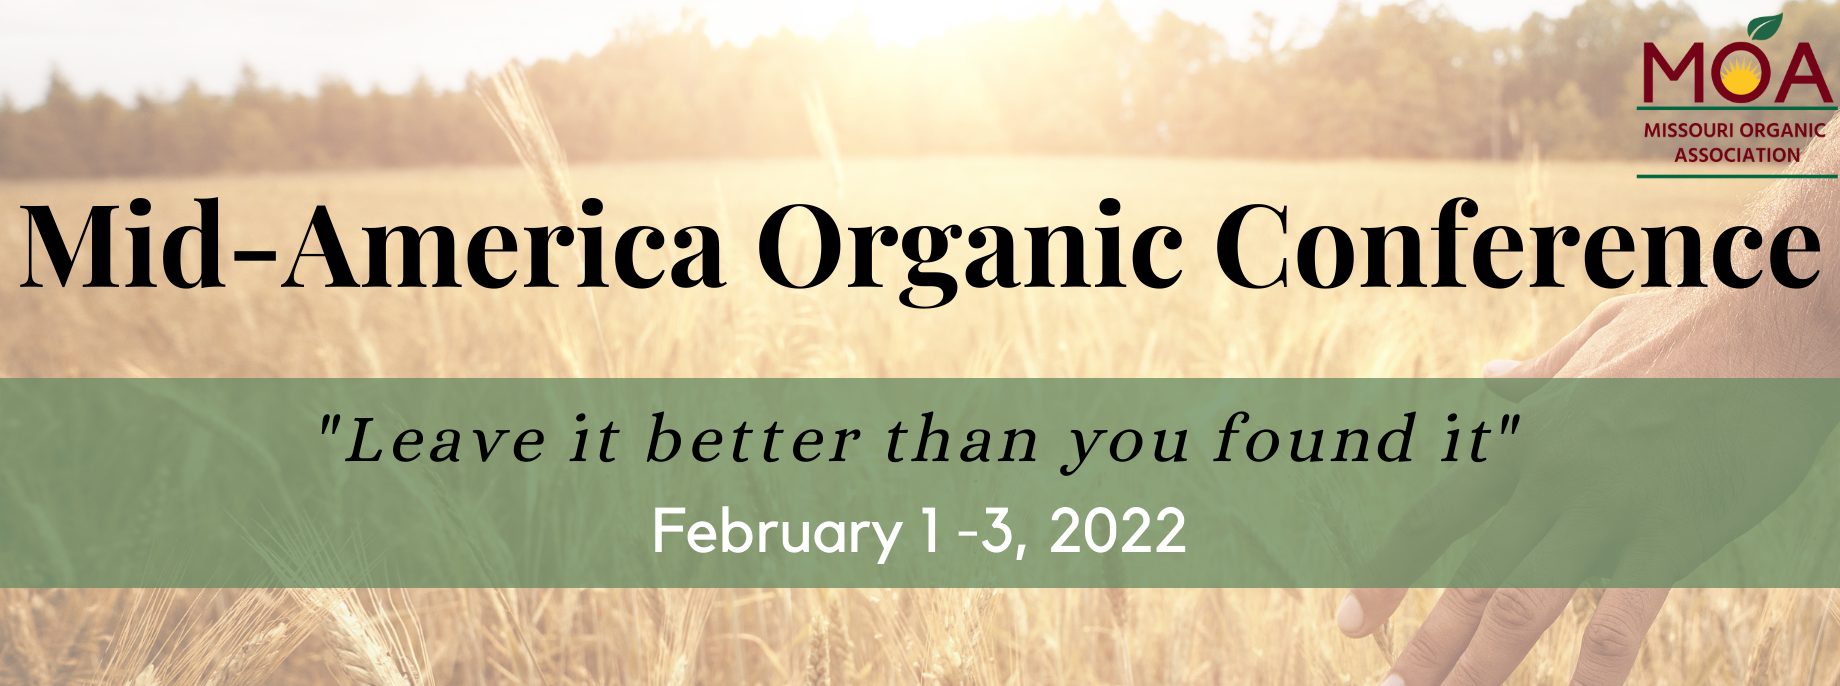 2022 Mid-America Organic Conference - Missouri Organic Association